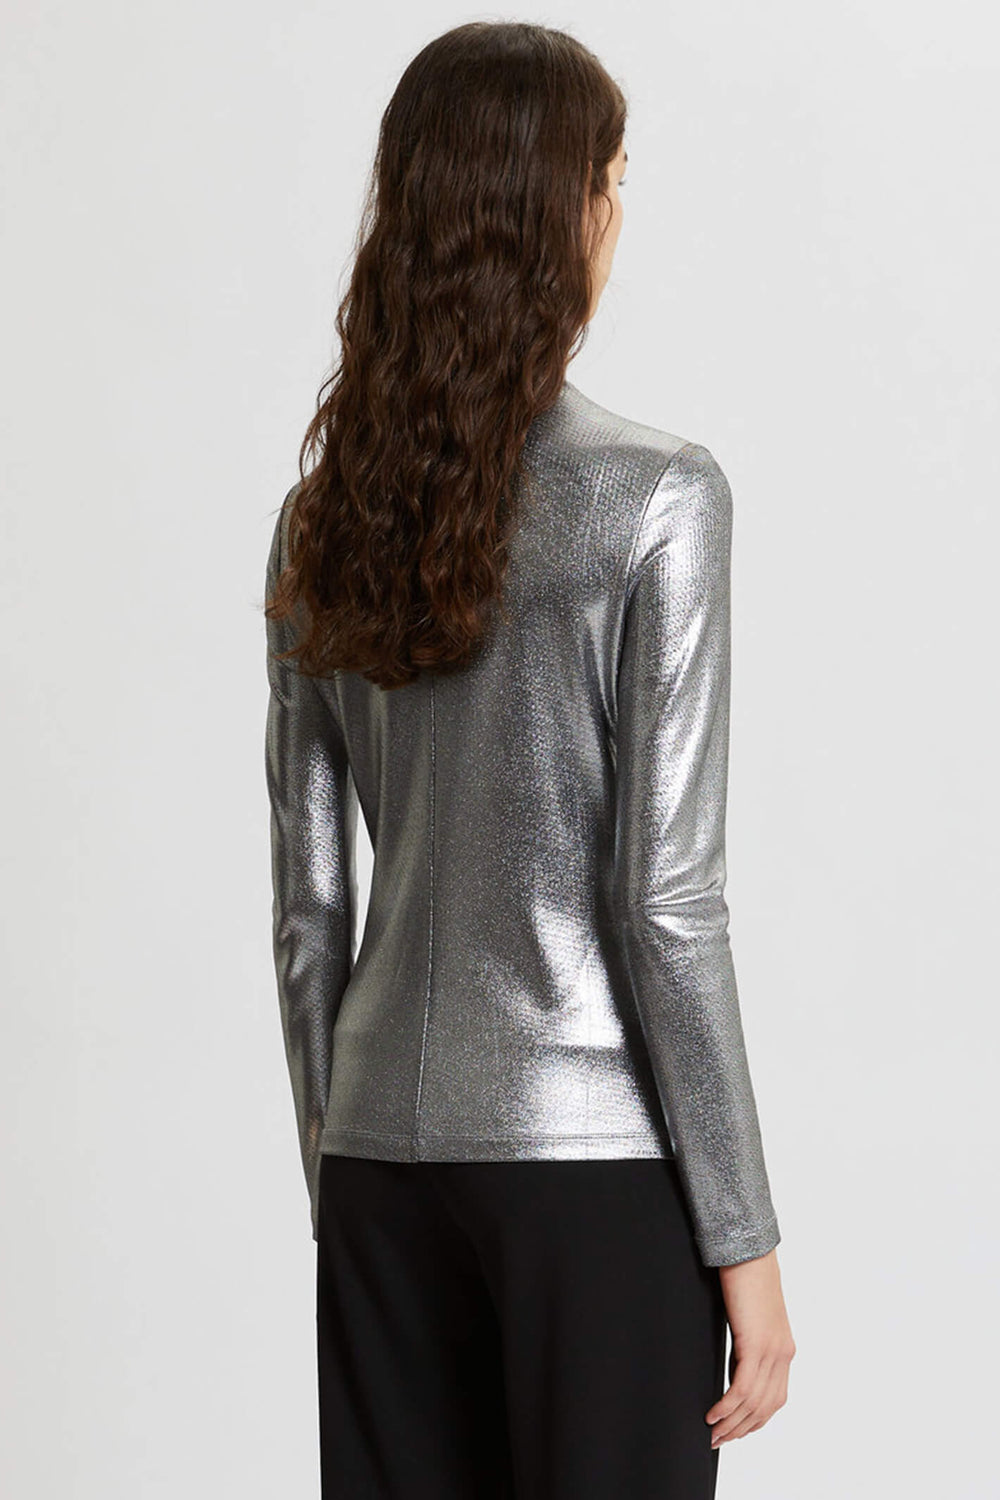 Marella Fervida 2339460336200 Black Silver Foiled Long Sleeve Top - Olivia Grace Fashion